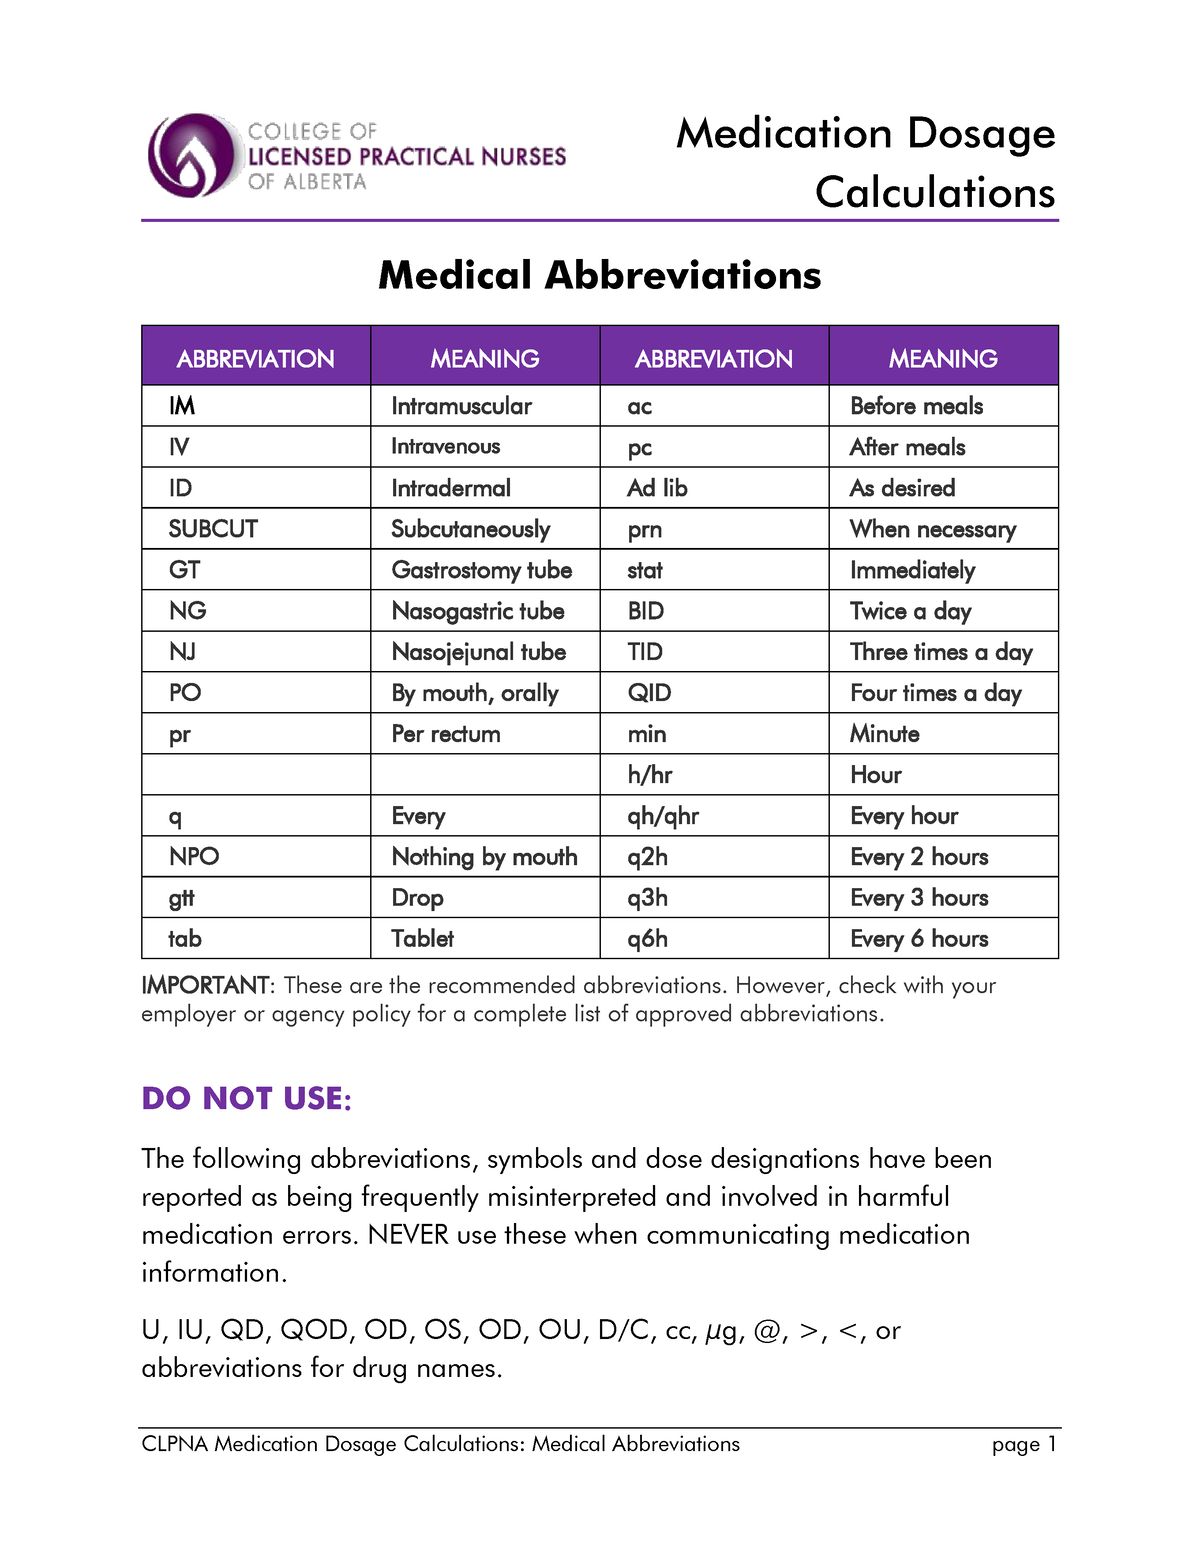 prescription abbreviation chart